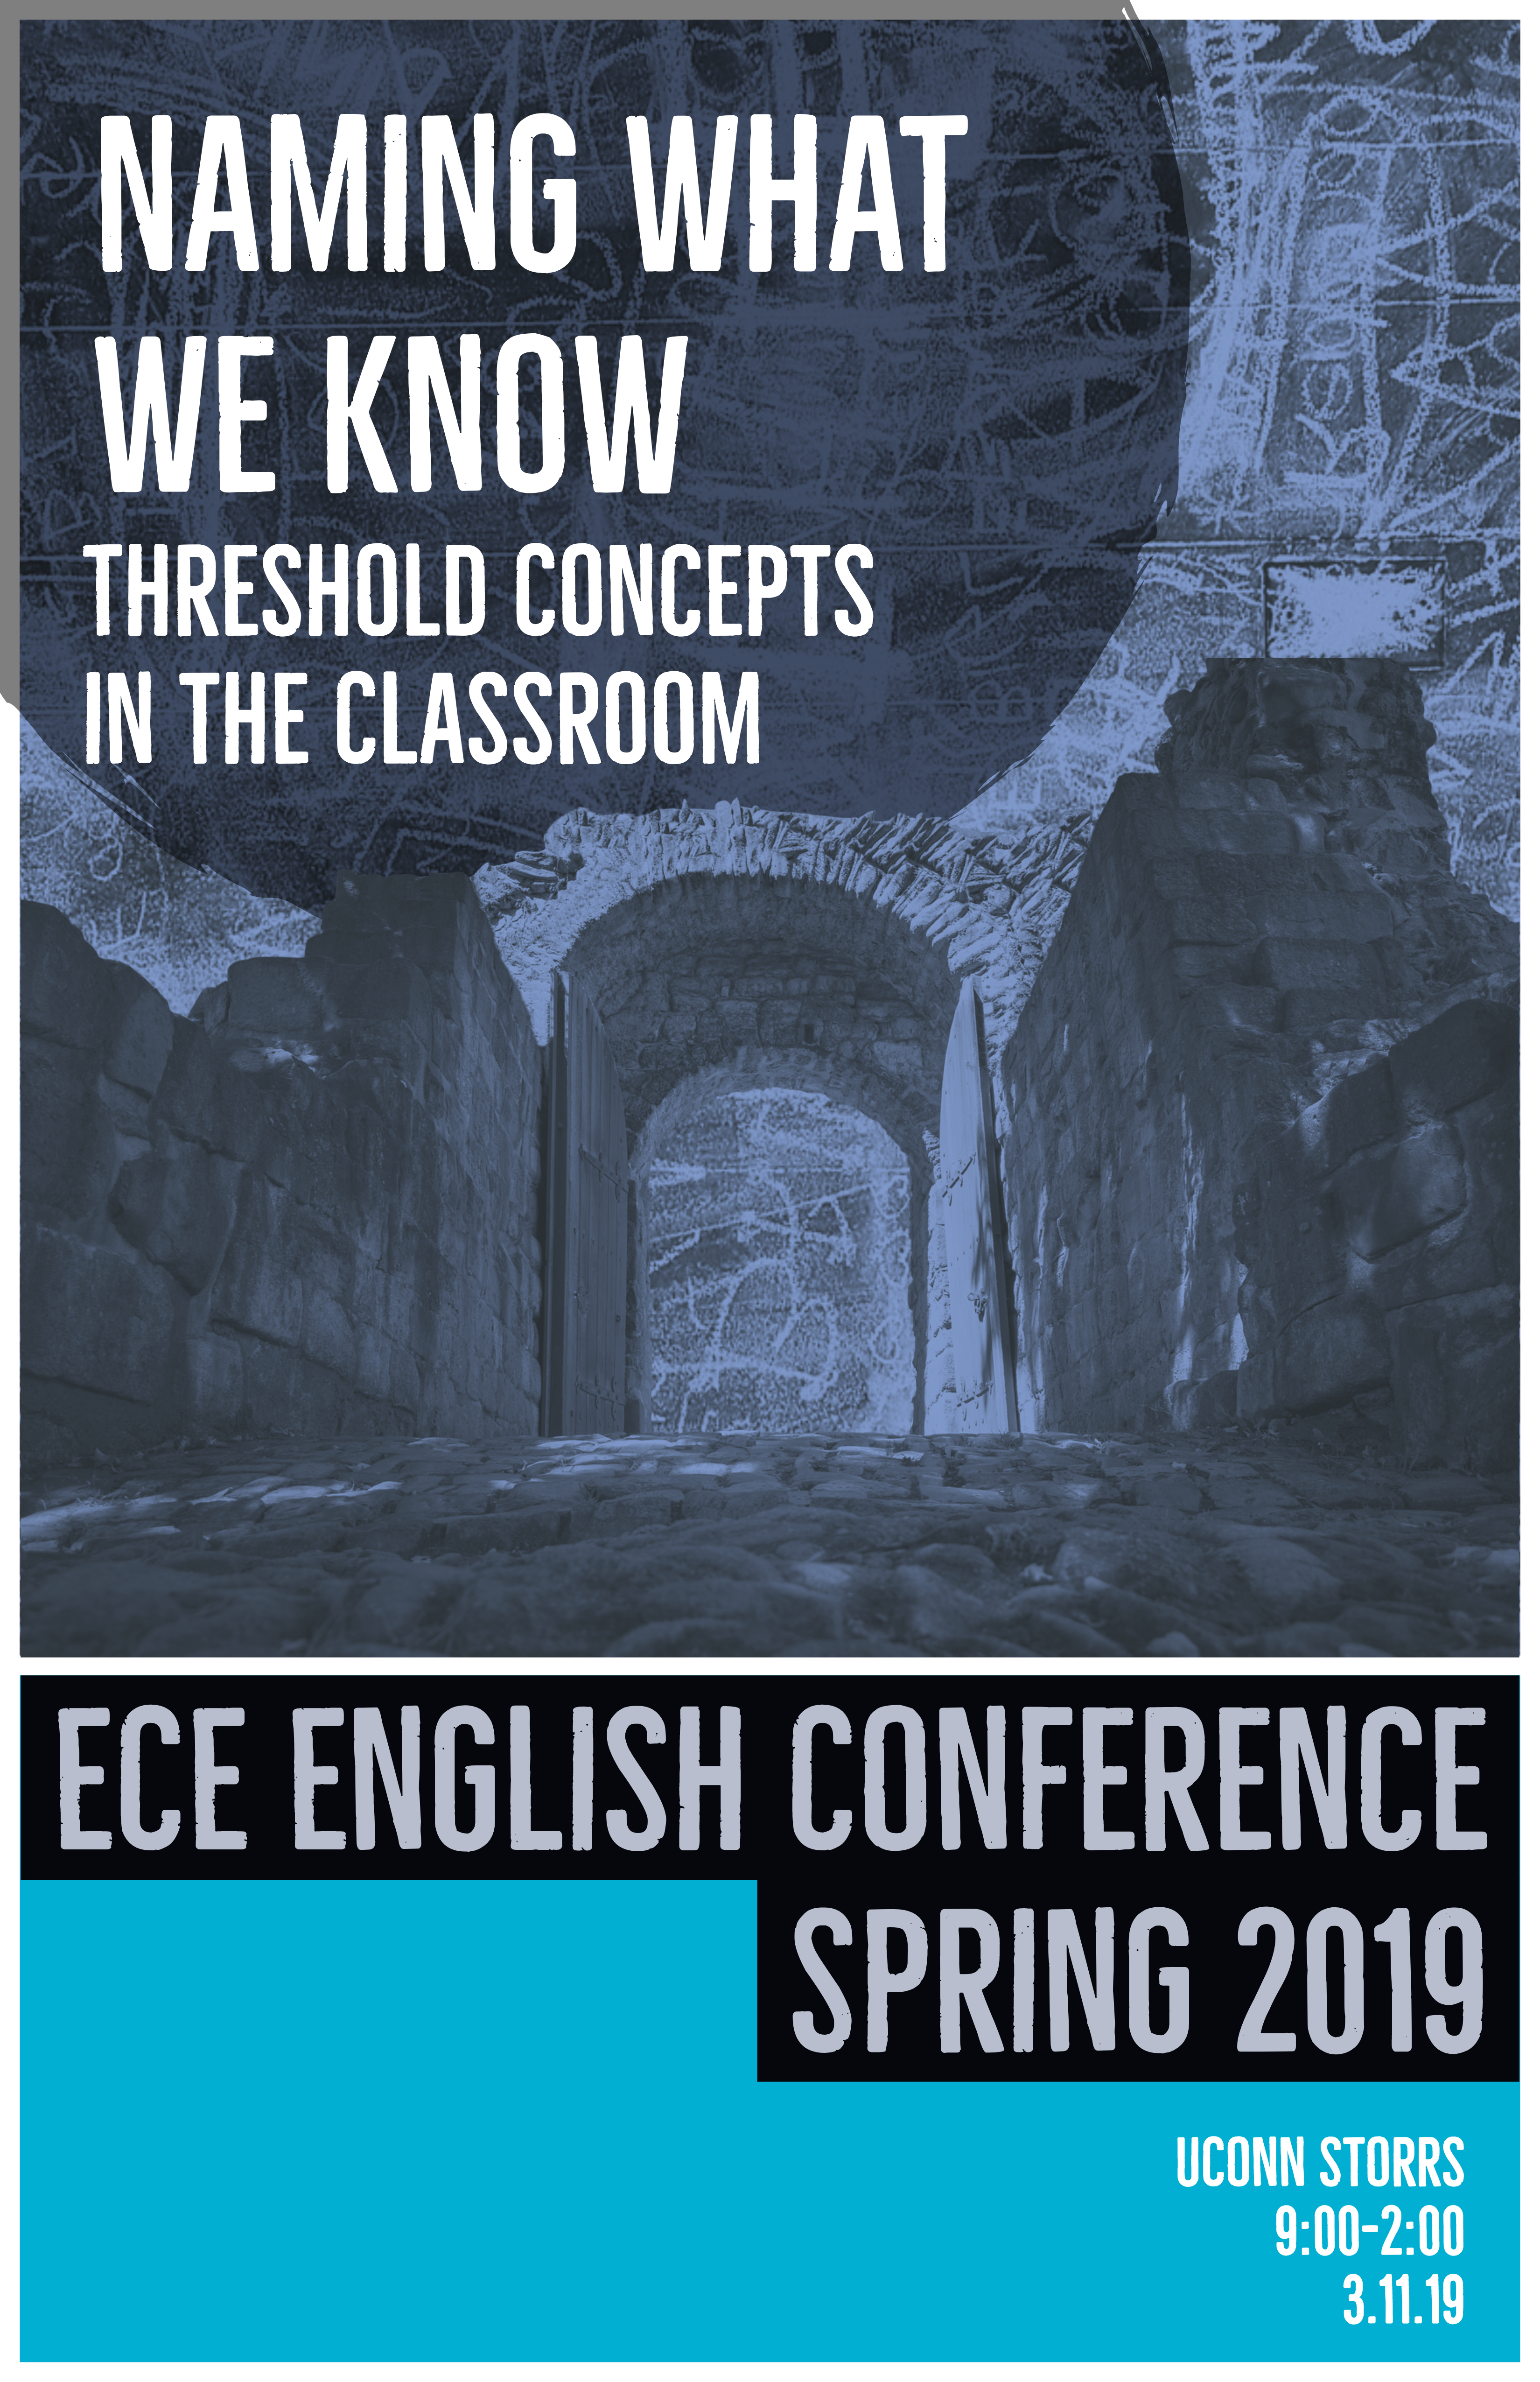 ECE English Conference ECE English